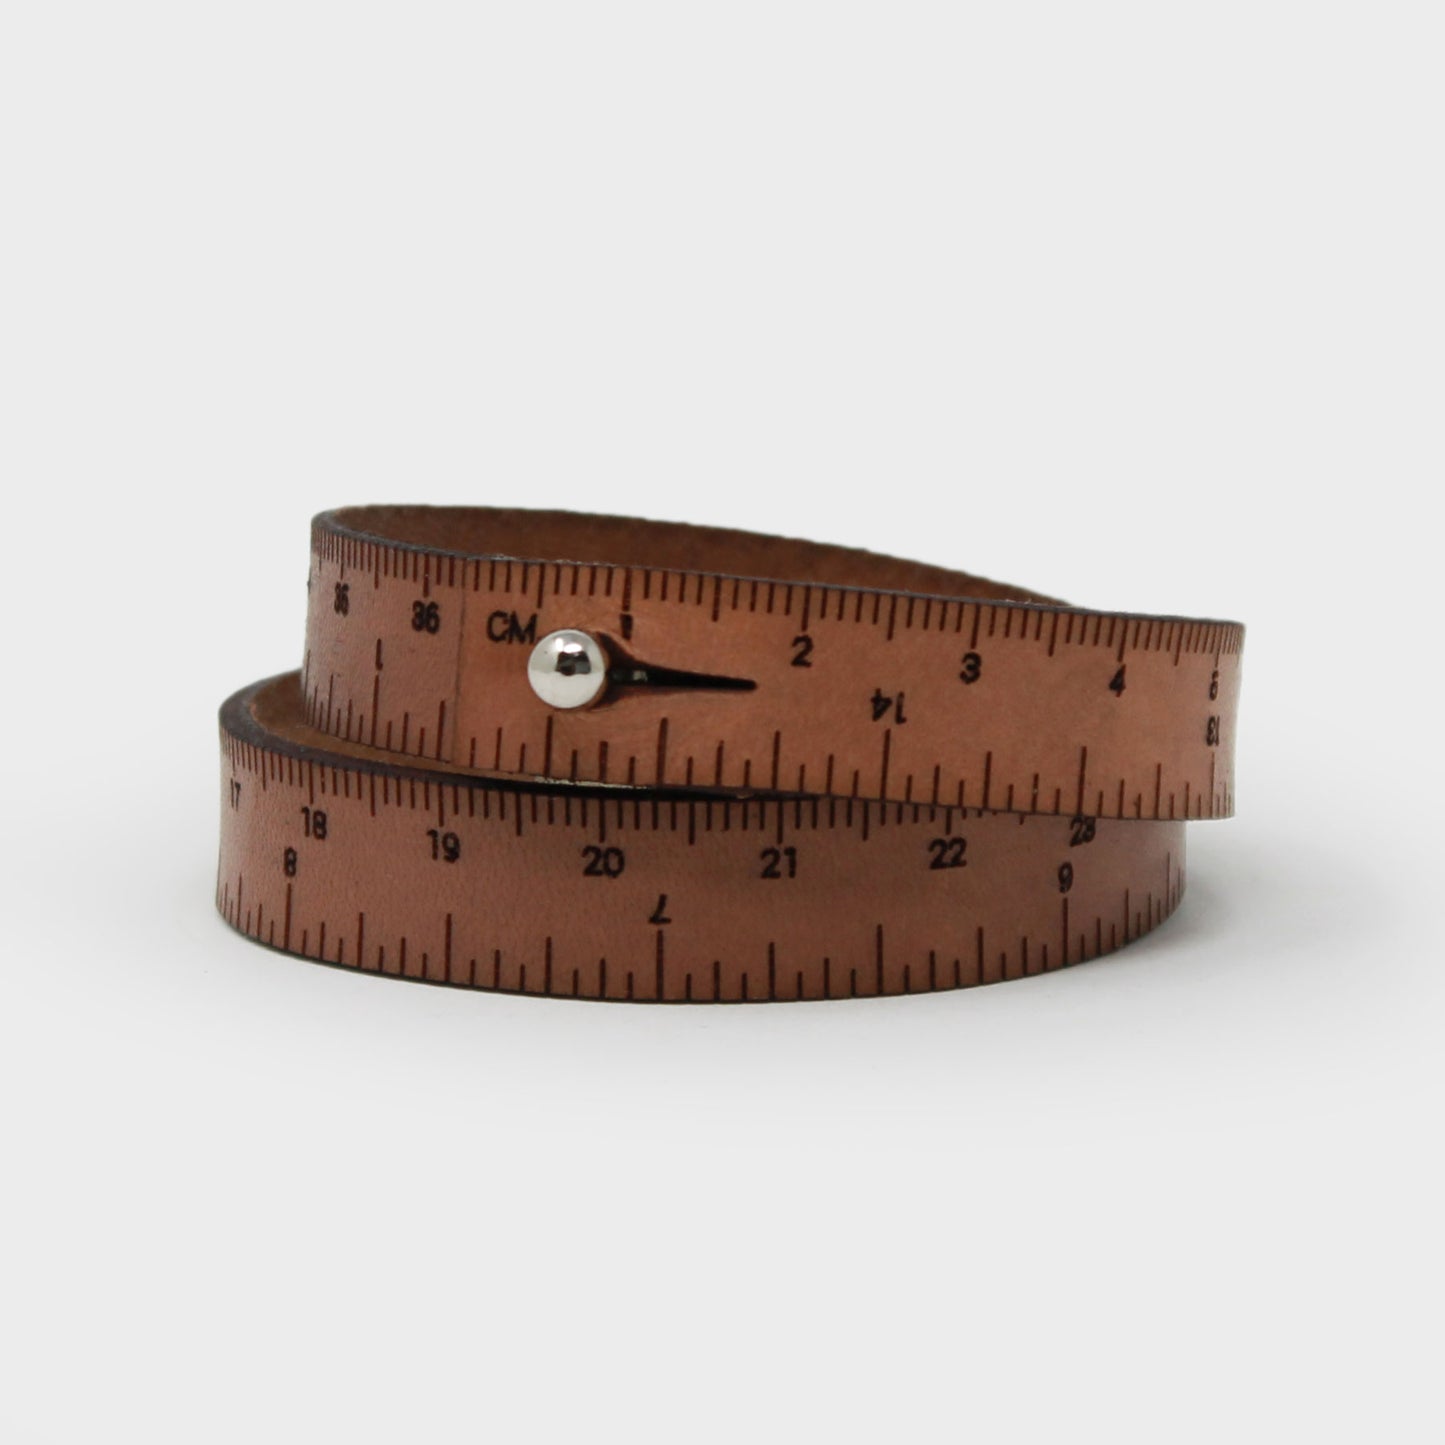 Measuring bracelet - Wrist ruler